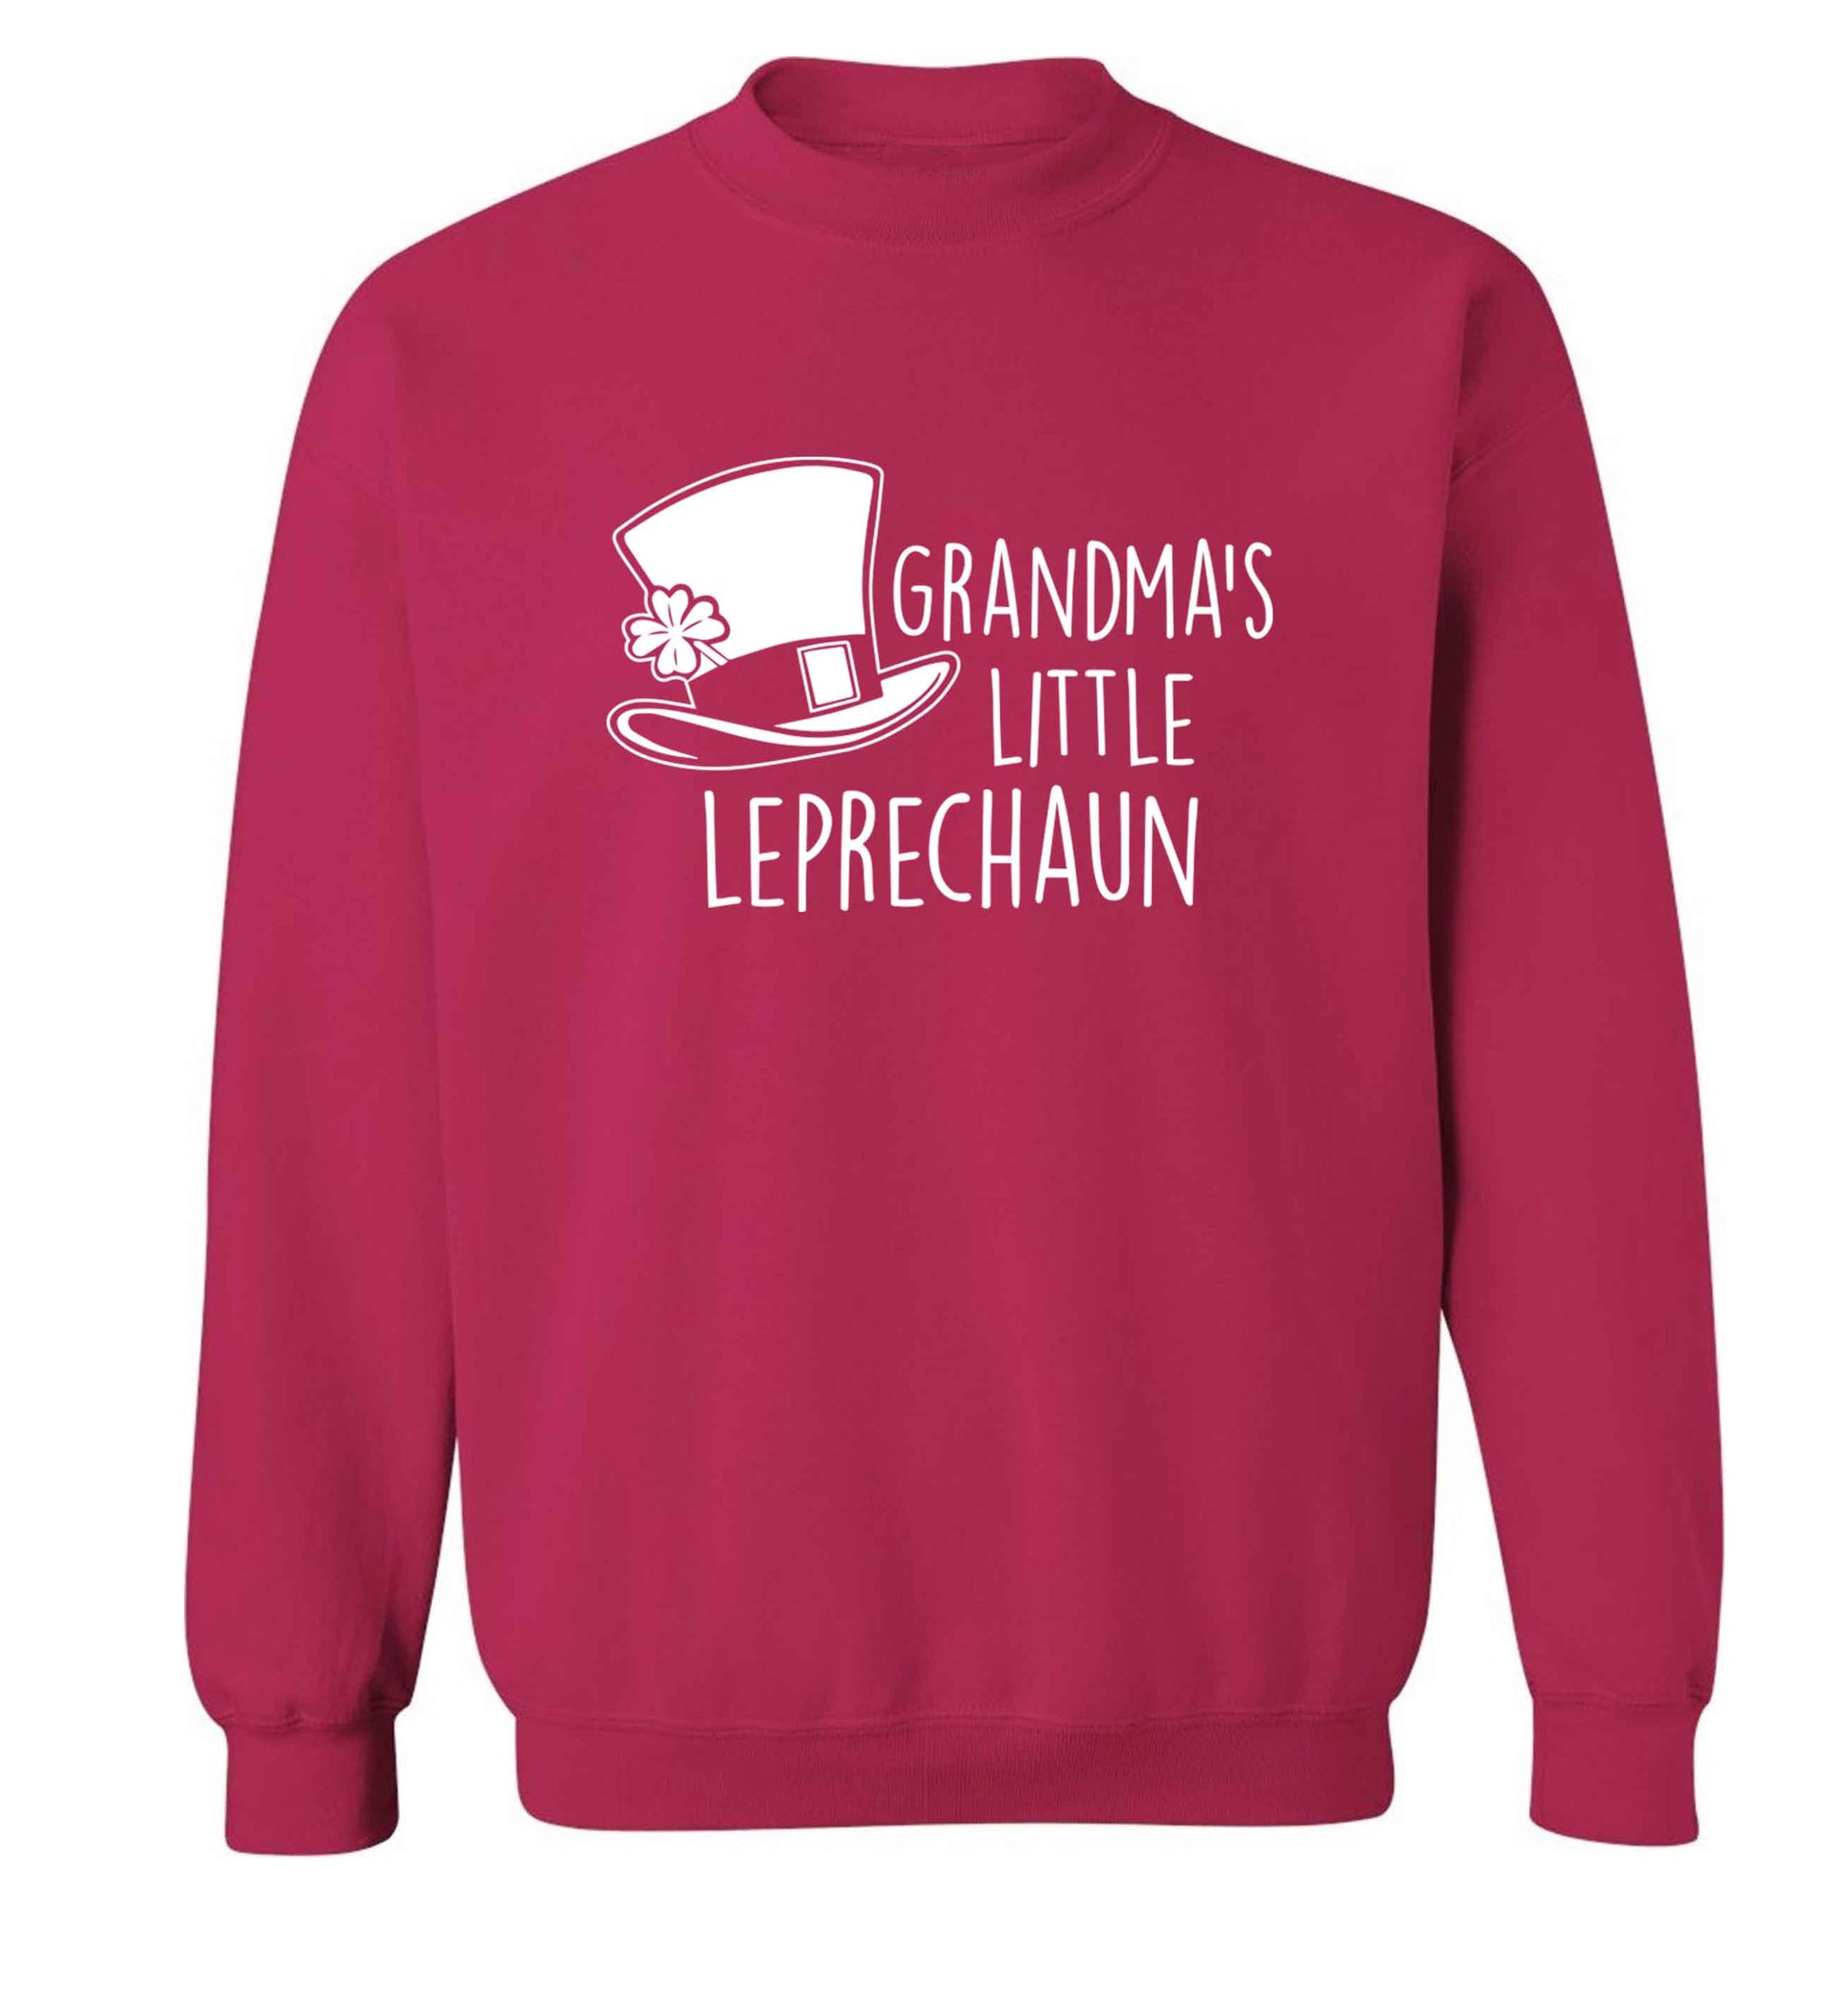 Grandma's little leprechaun adult's unisex pink sweater 2XL